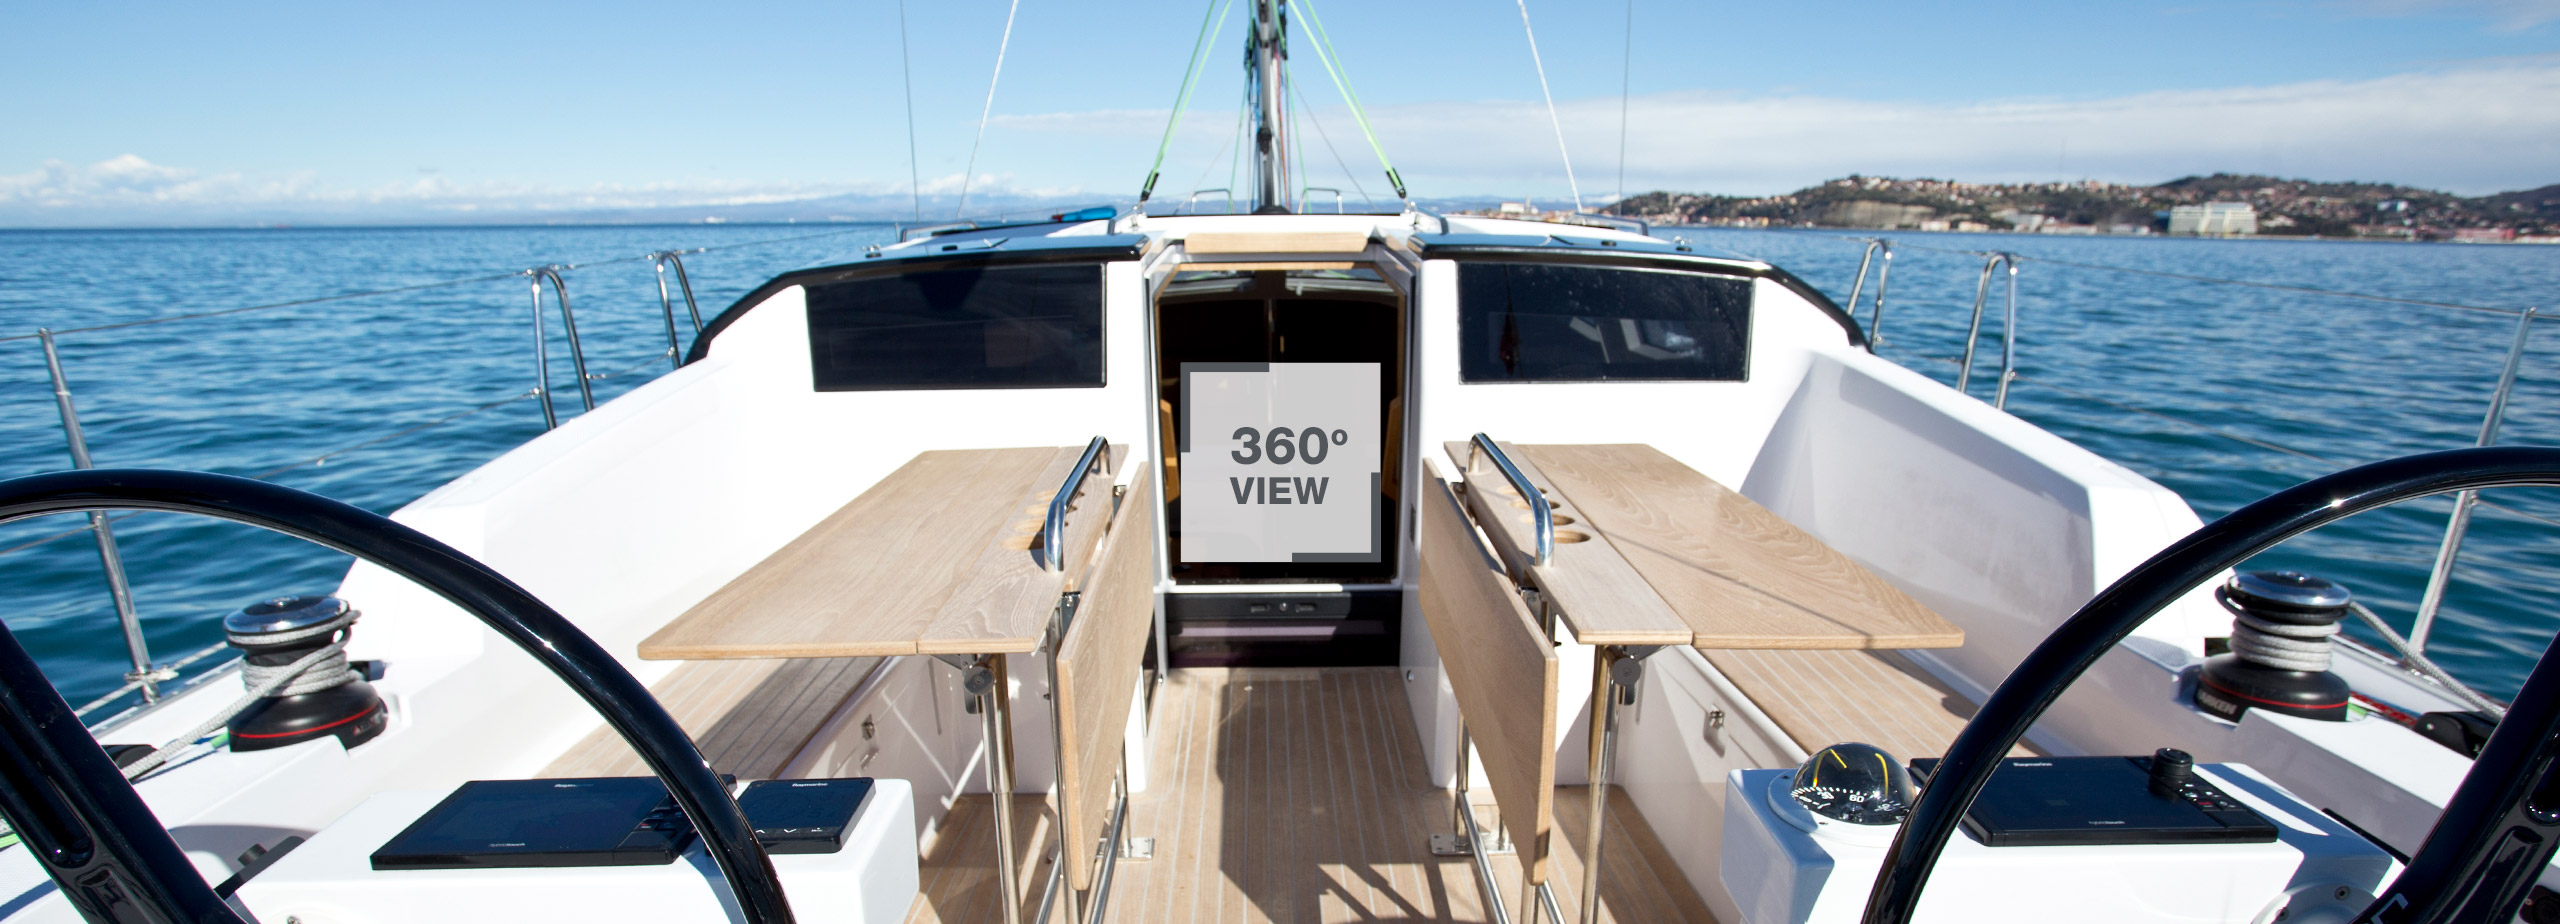 elan-yachts-gt5-performance-sailboat-360-image